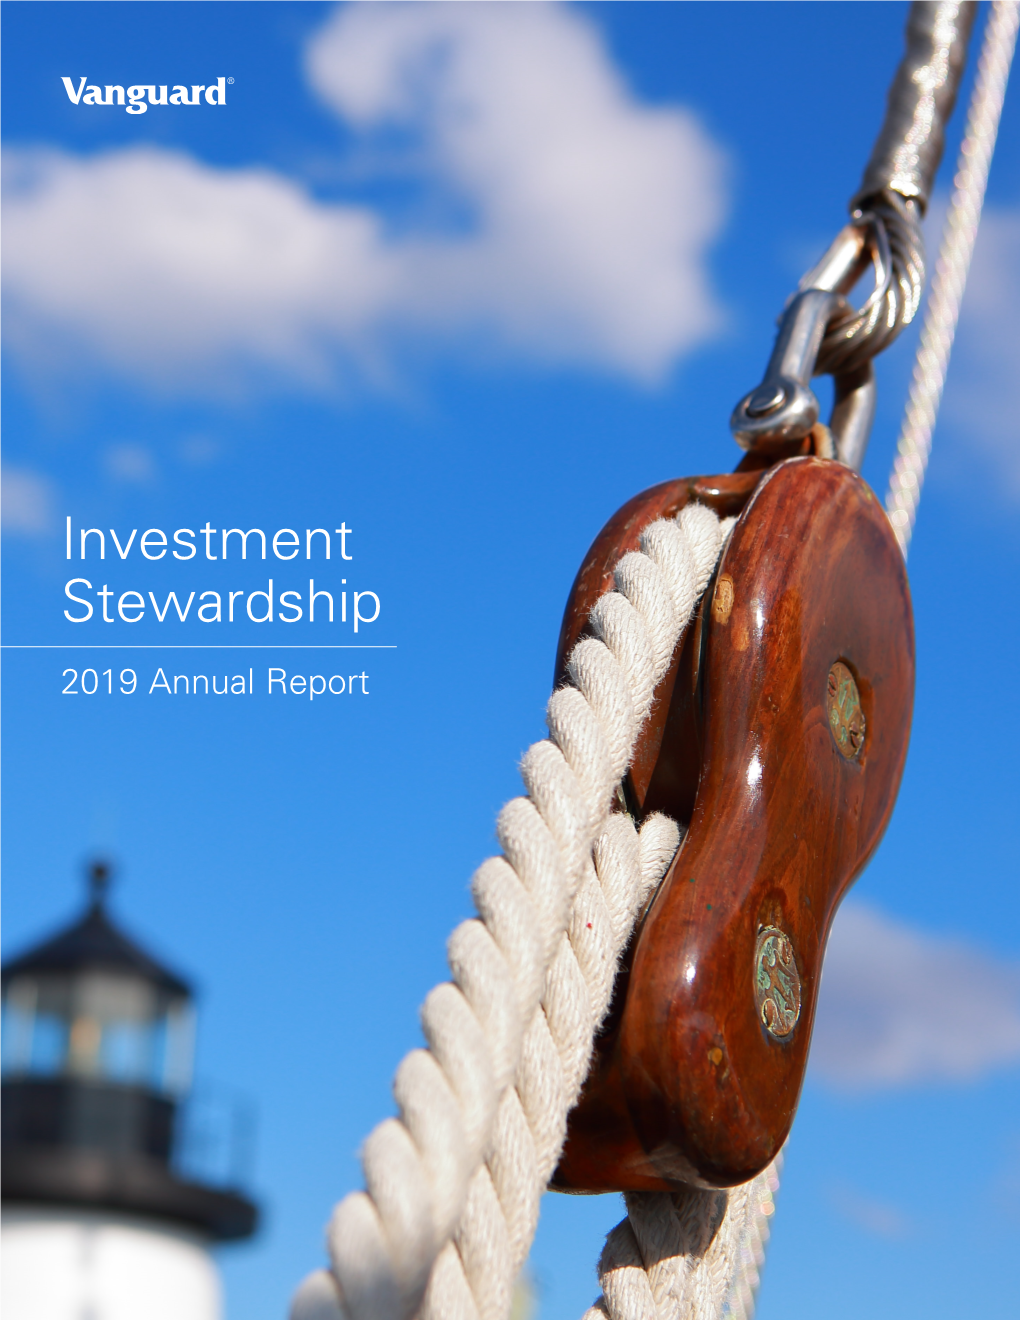 Vanguard Investment Stewardship: 2019 Annual Report